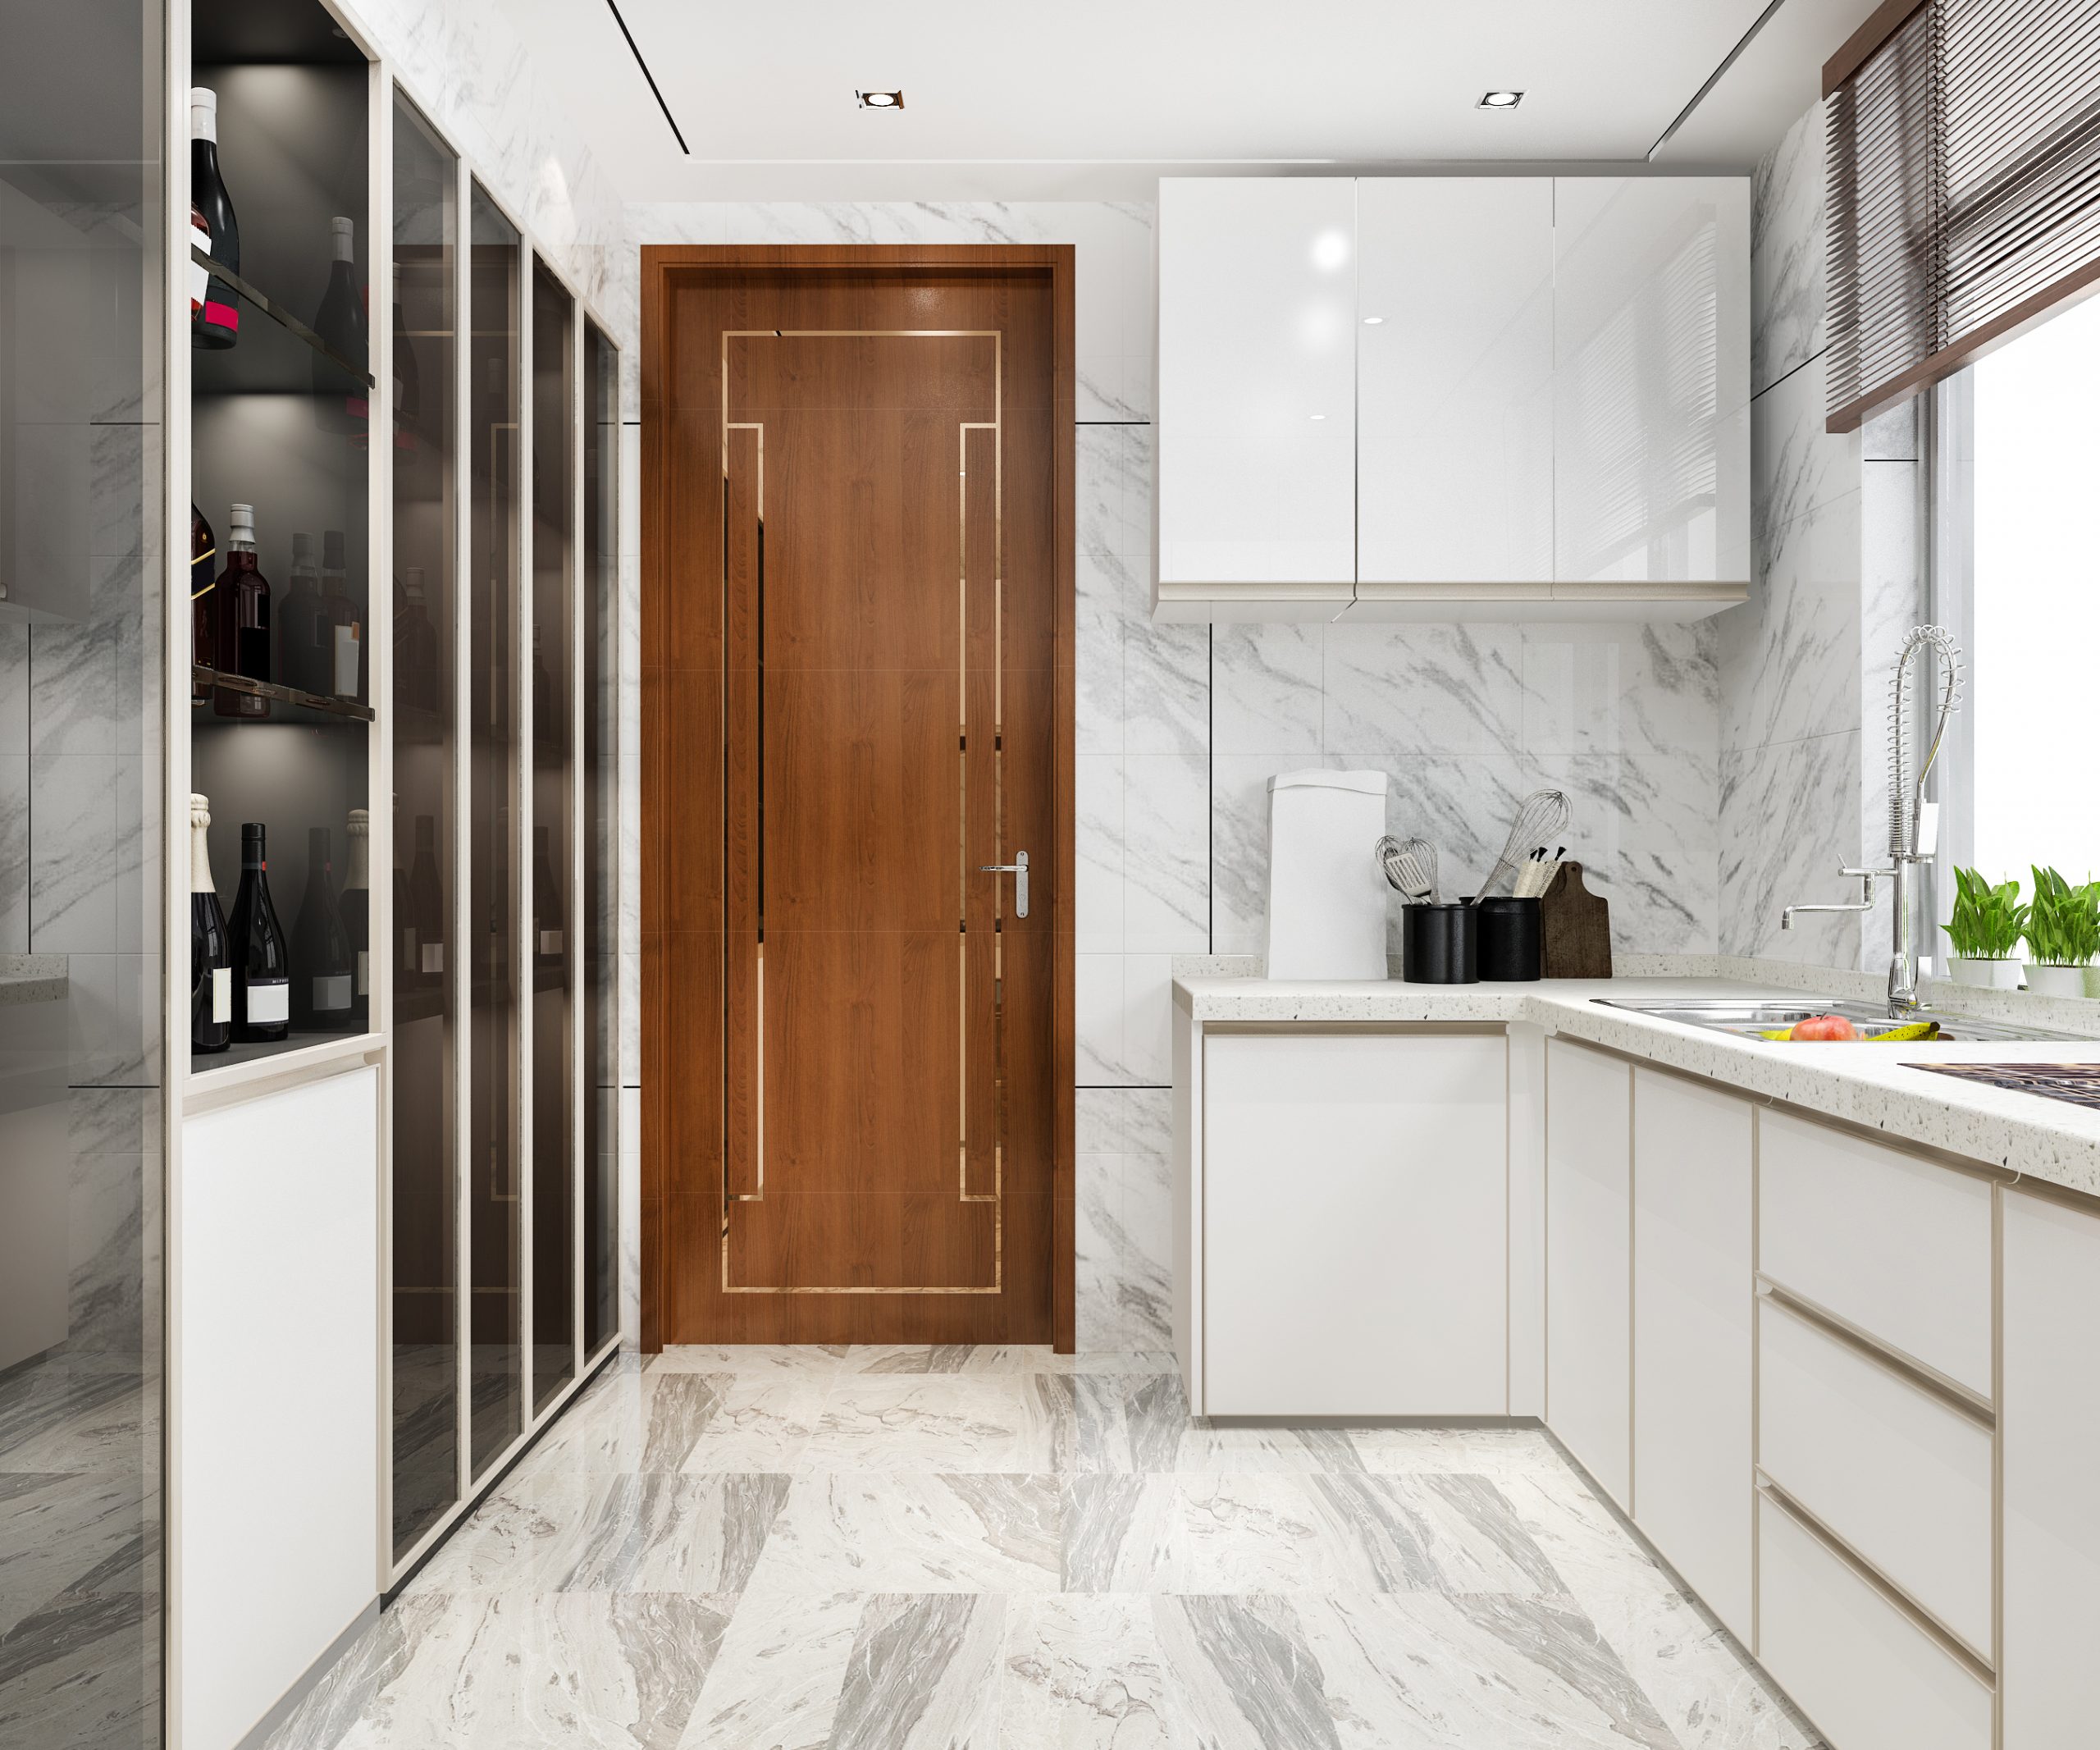 white minimal kitchen with wood decoration